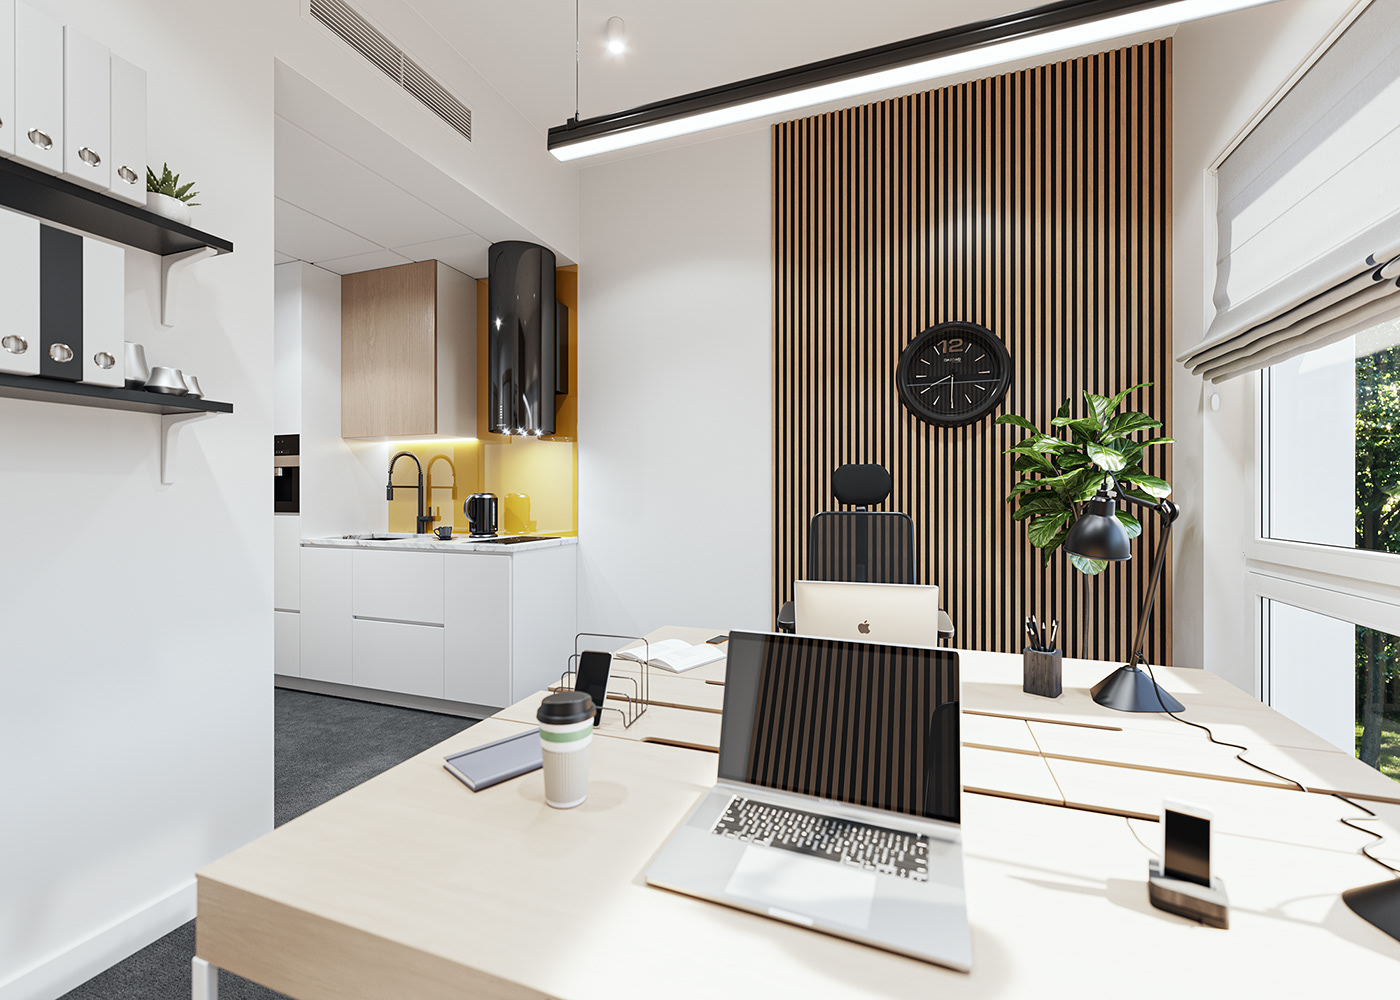 3D cgiart visualization visualizations interior design  homeoffice 3dsmax rendering Rendering Services Wizualizacje